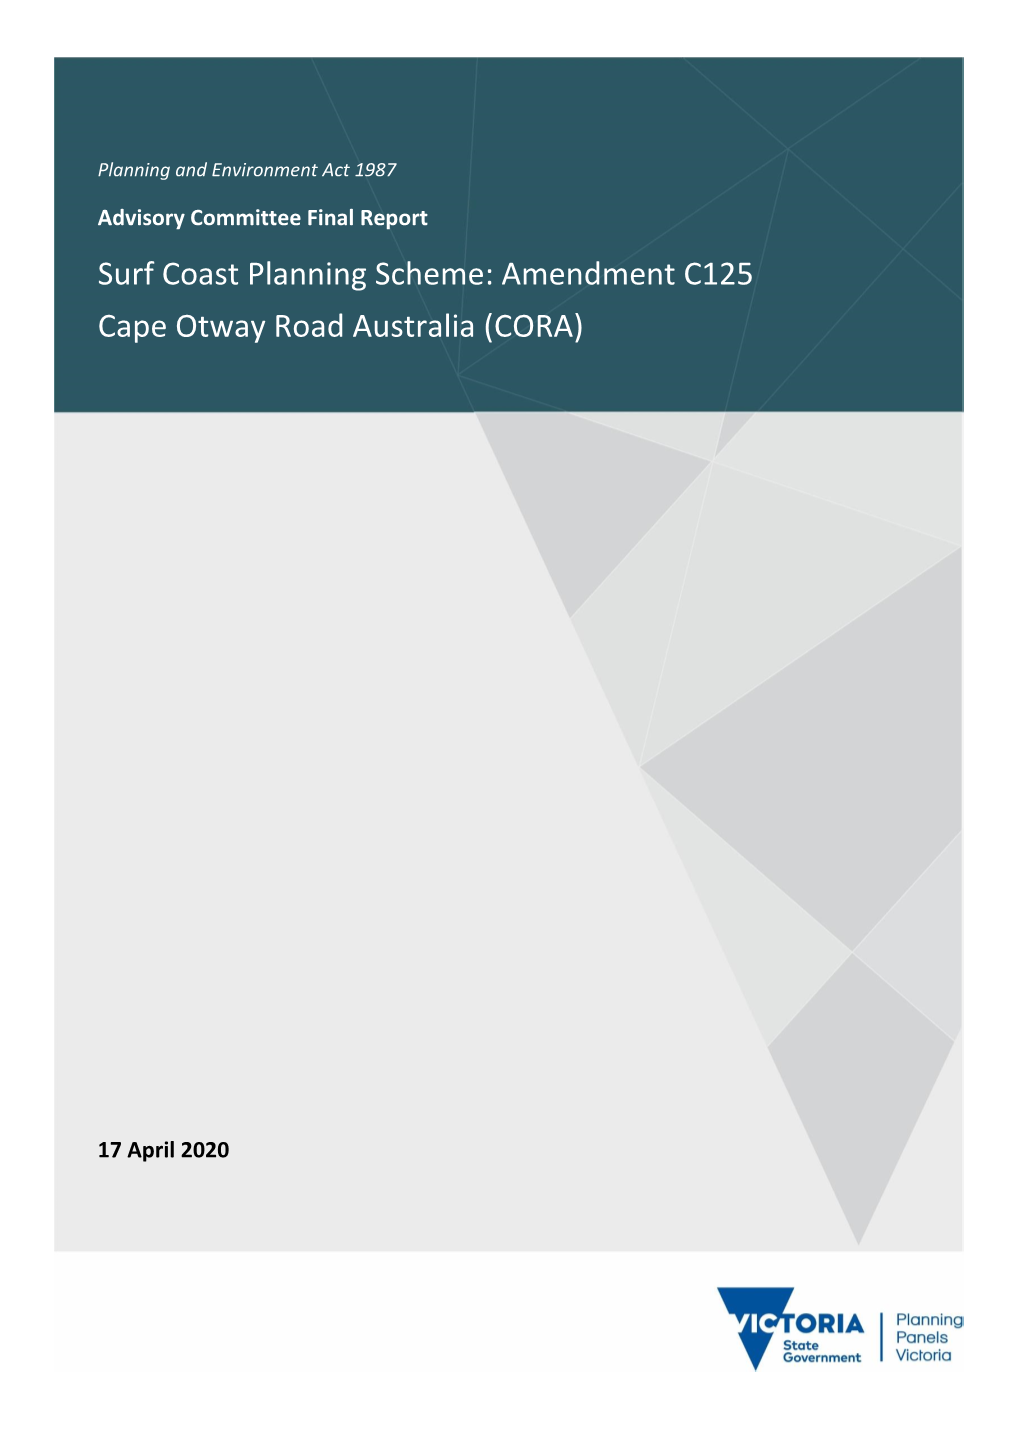 Surf Coast Planning Scheme: Amendment C125 Cape Otway Road Australia (CORA)